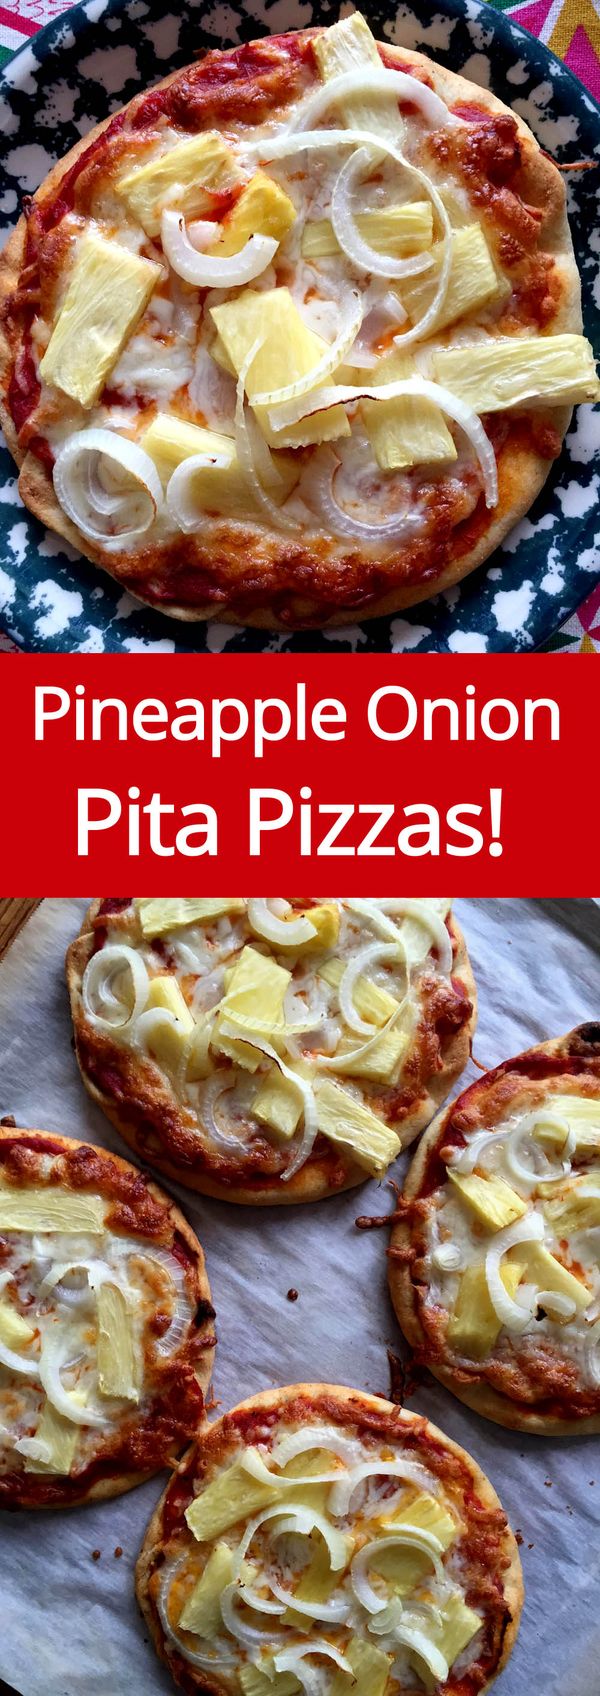 Pineapple Onion Personal Pita Pizzas